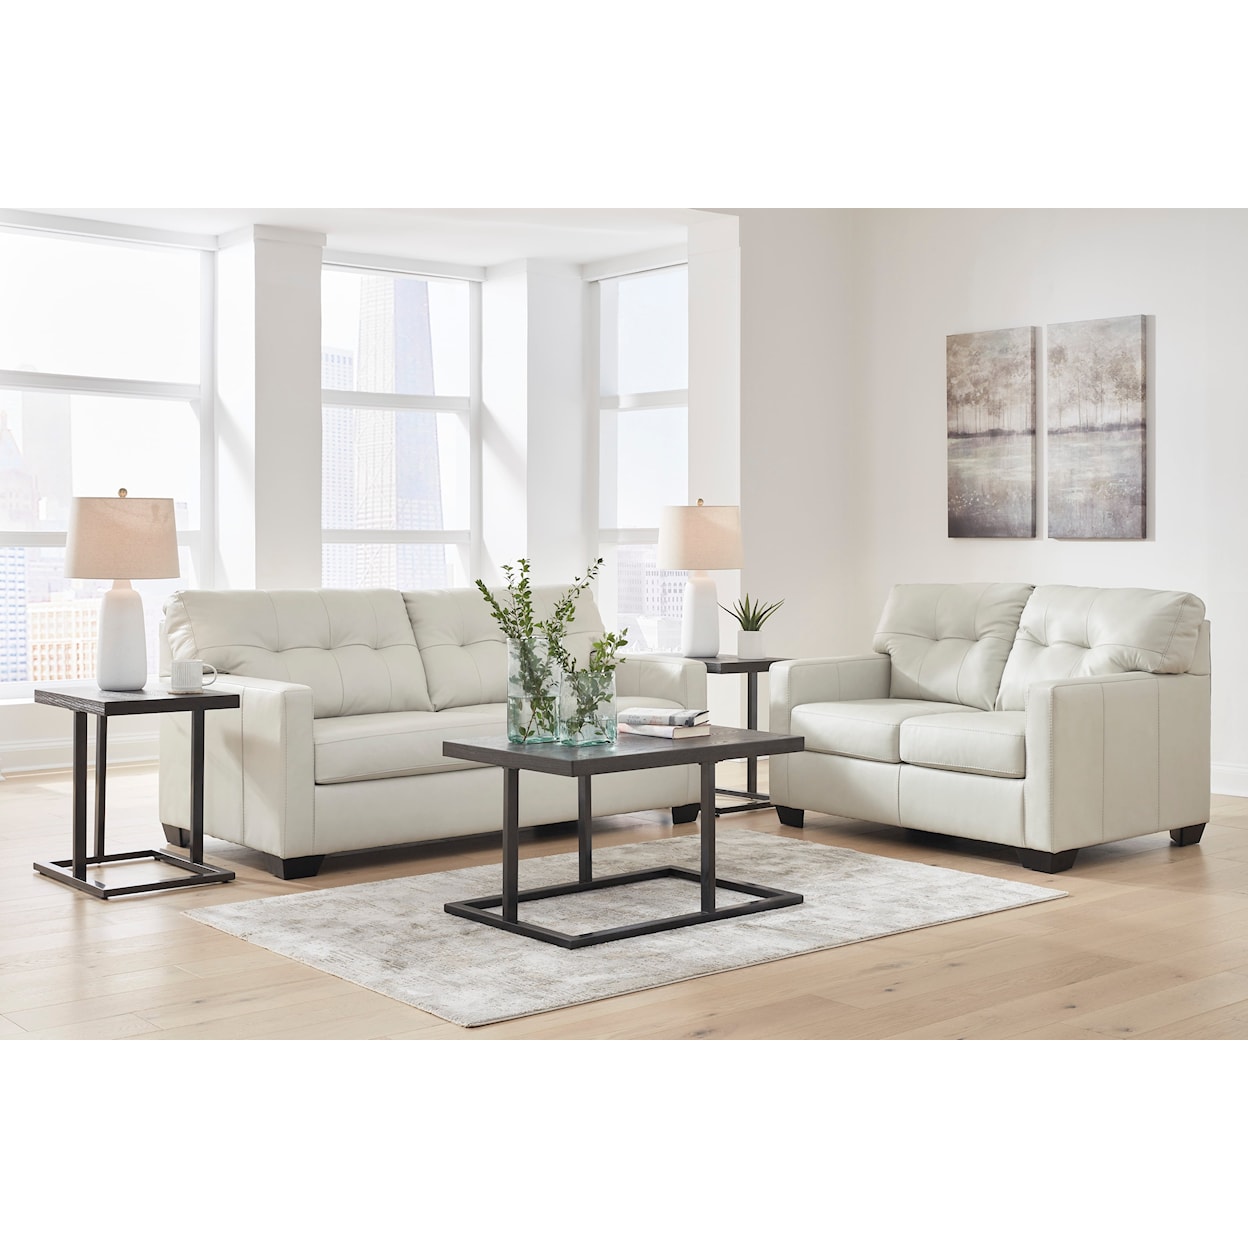 Ashley Furniture Signature Design Belziani Living Room Set